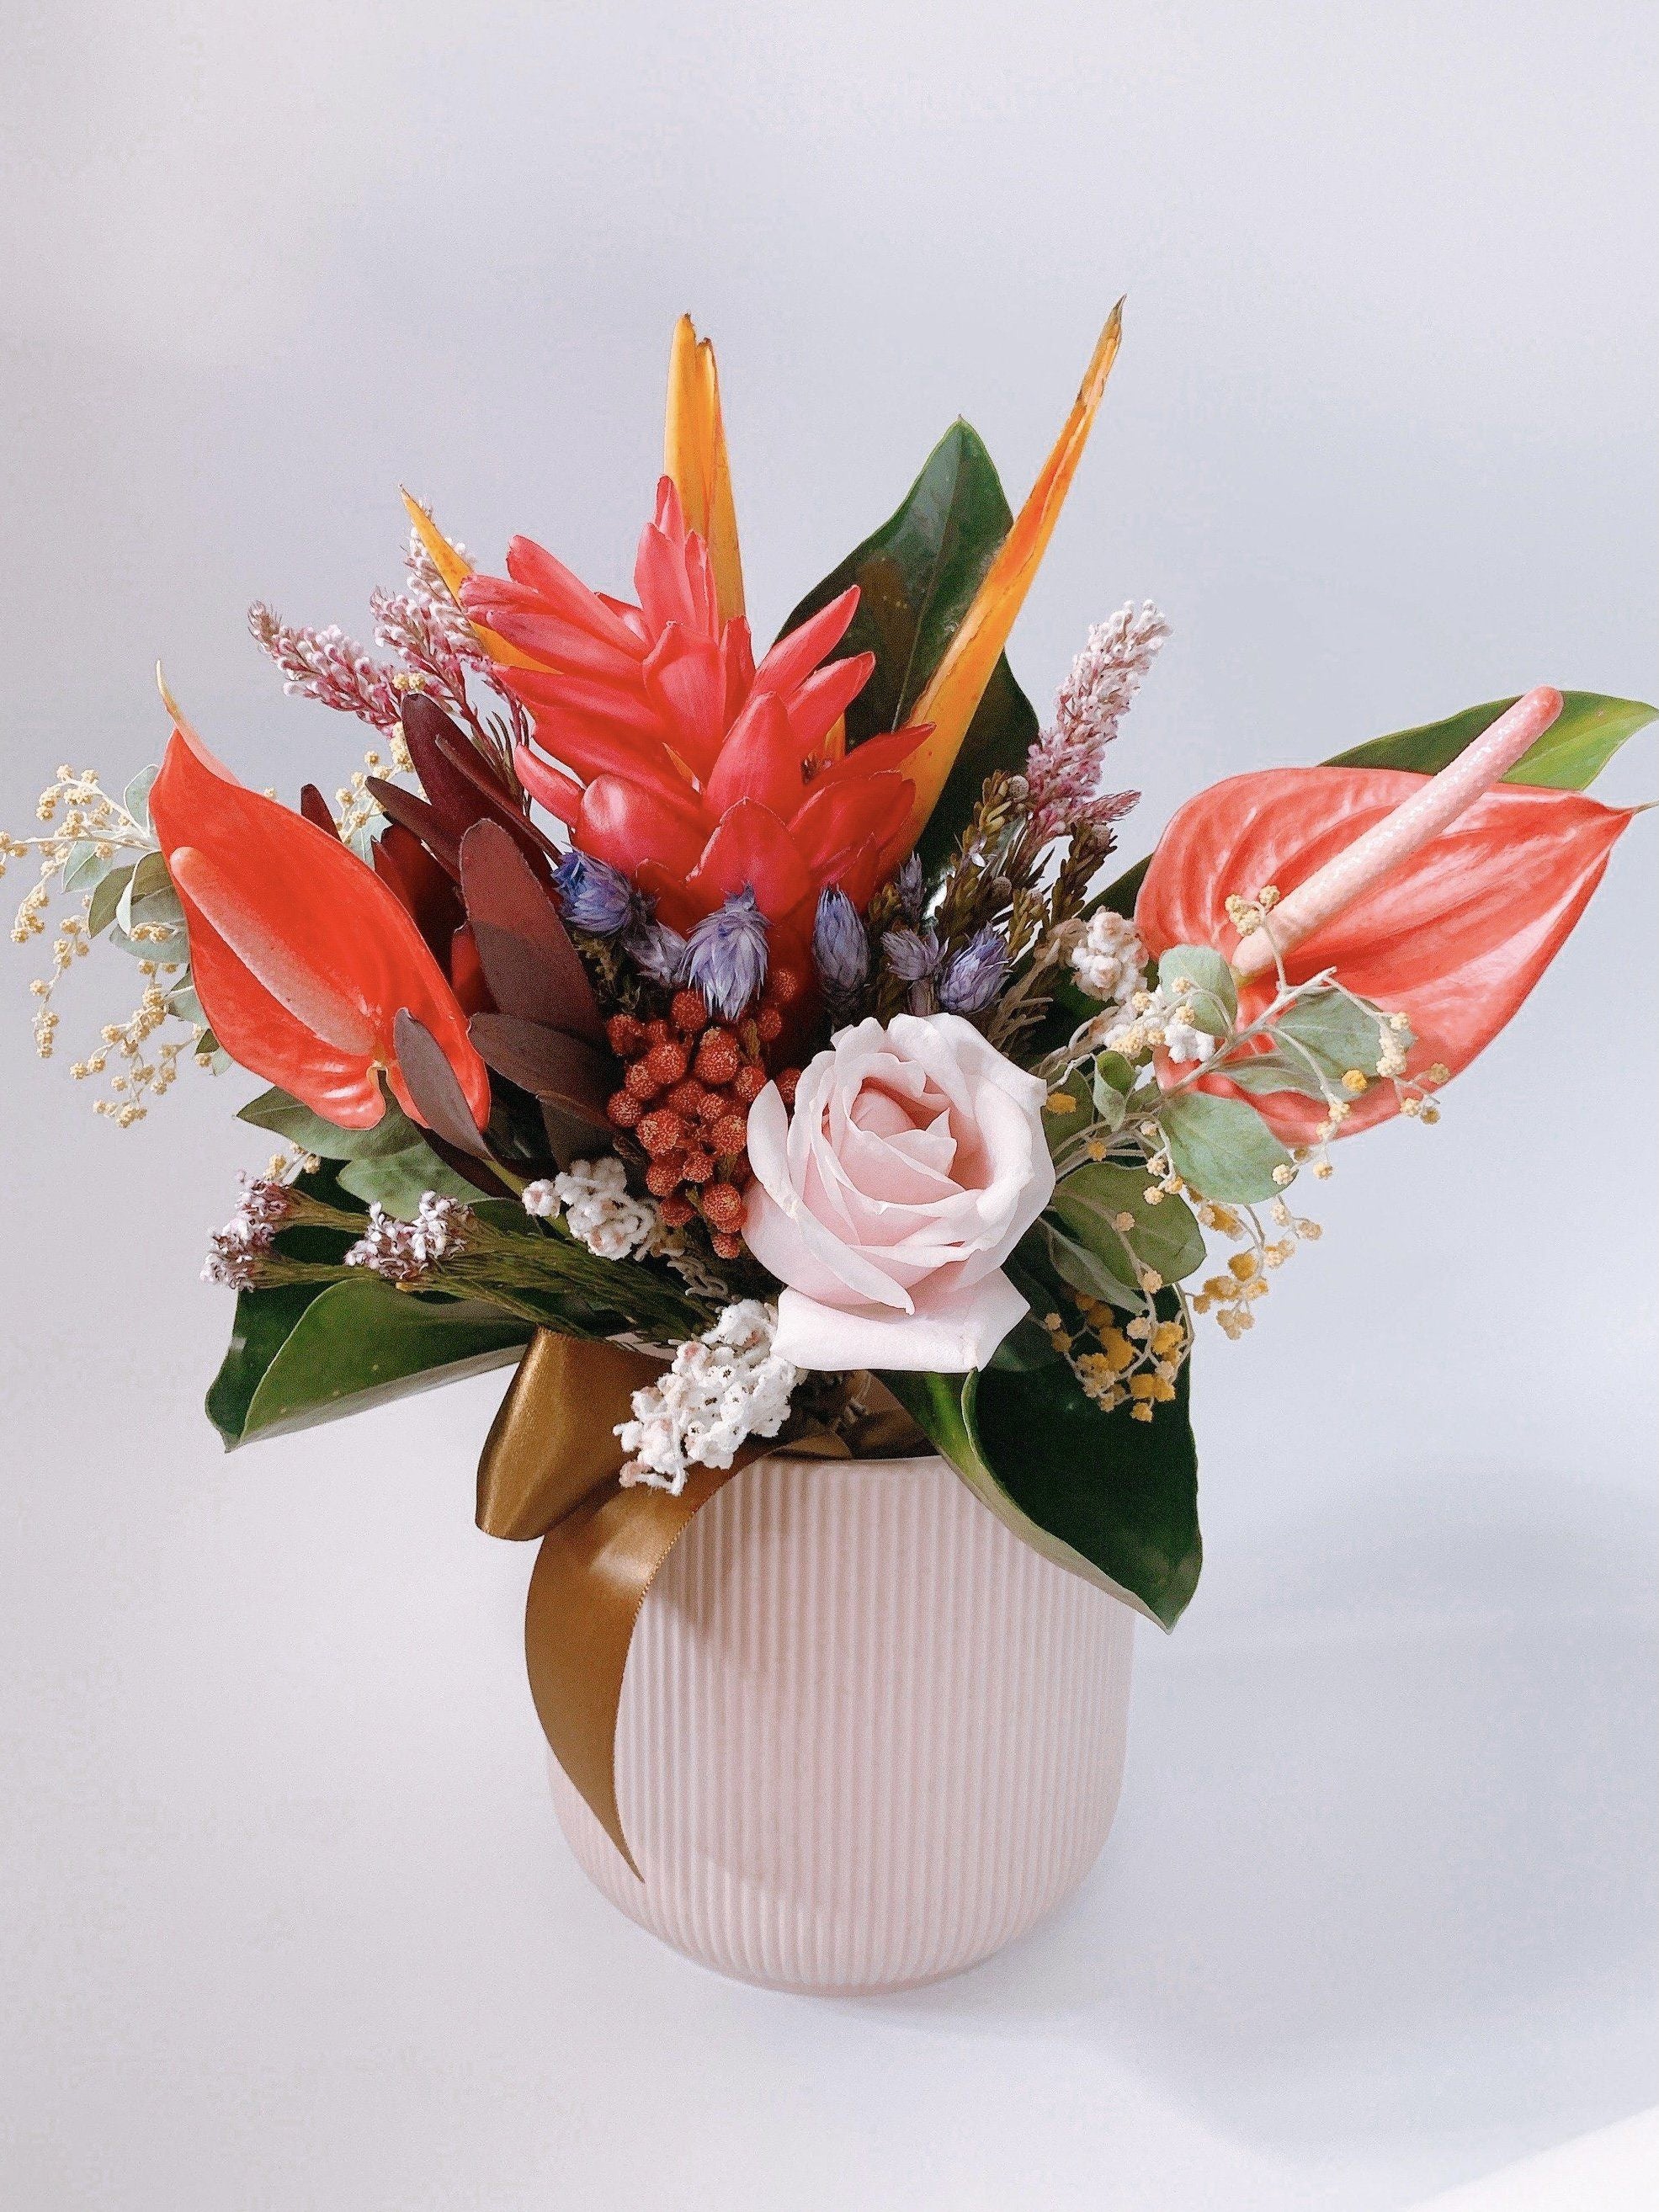 Gifts to Cheer Someone Up - Ana Hana Flower